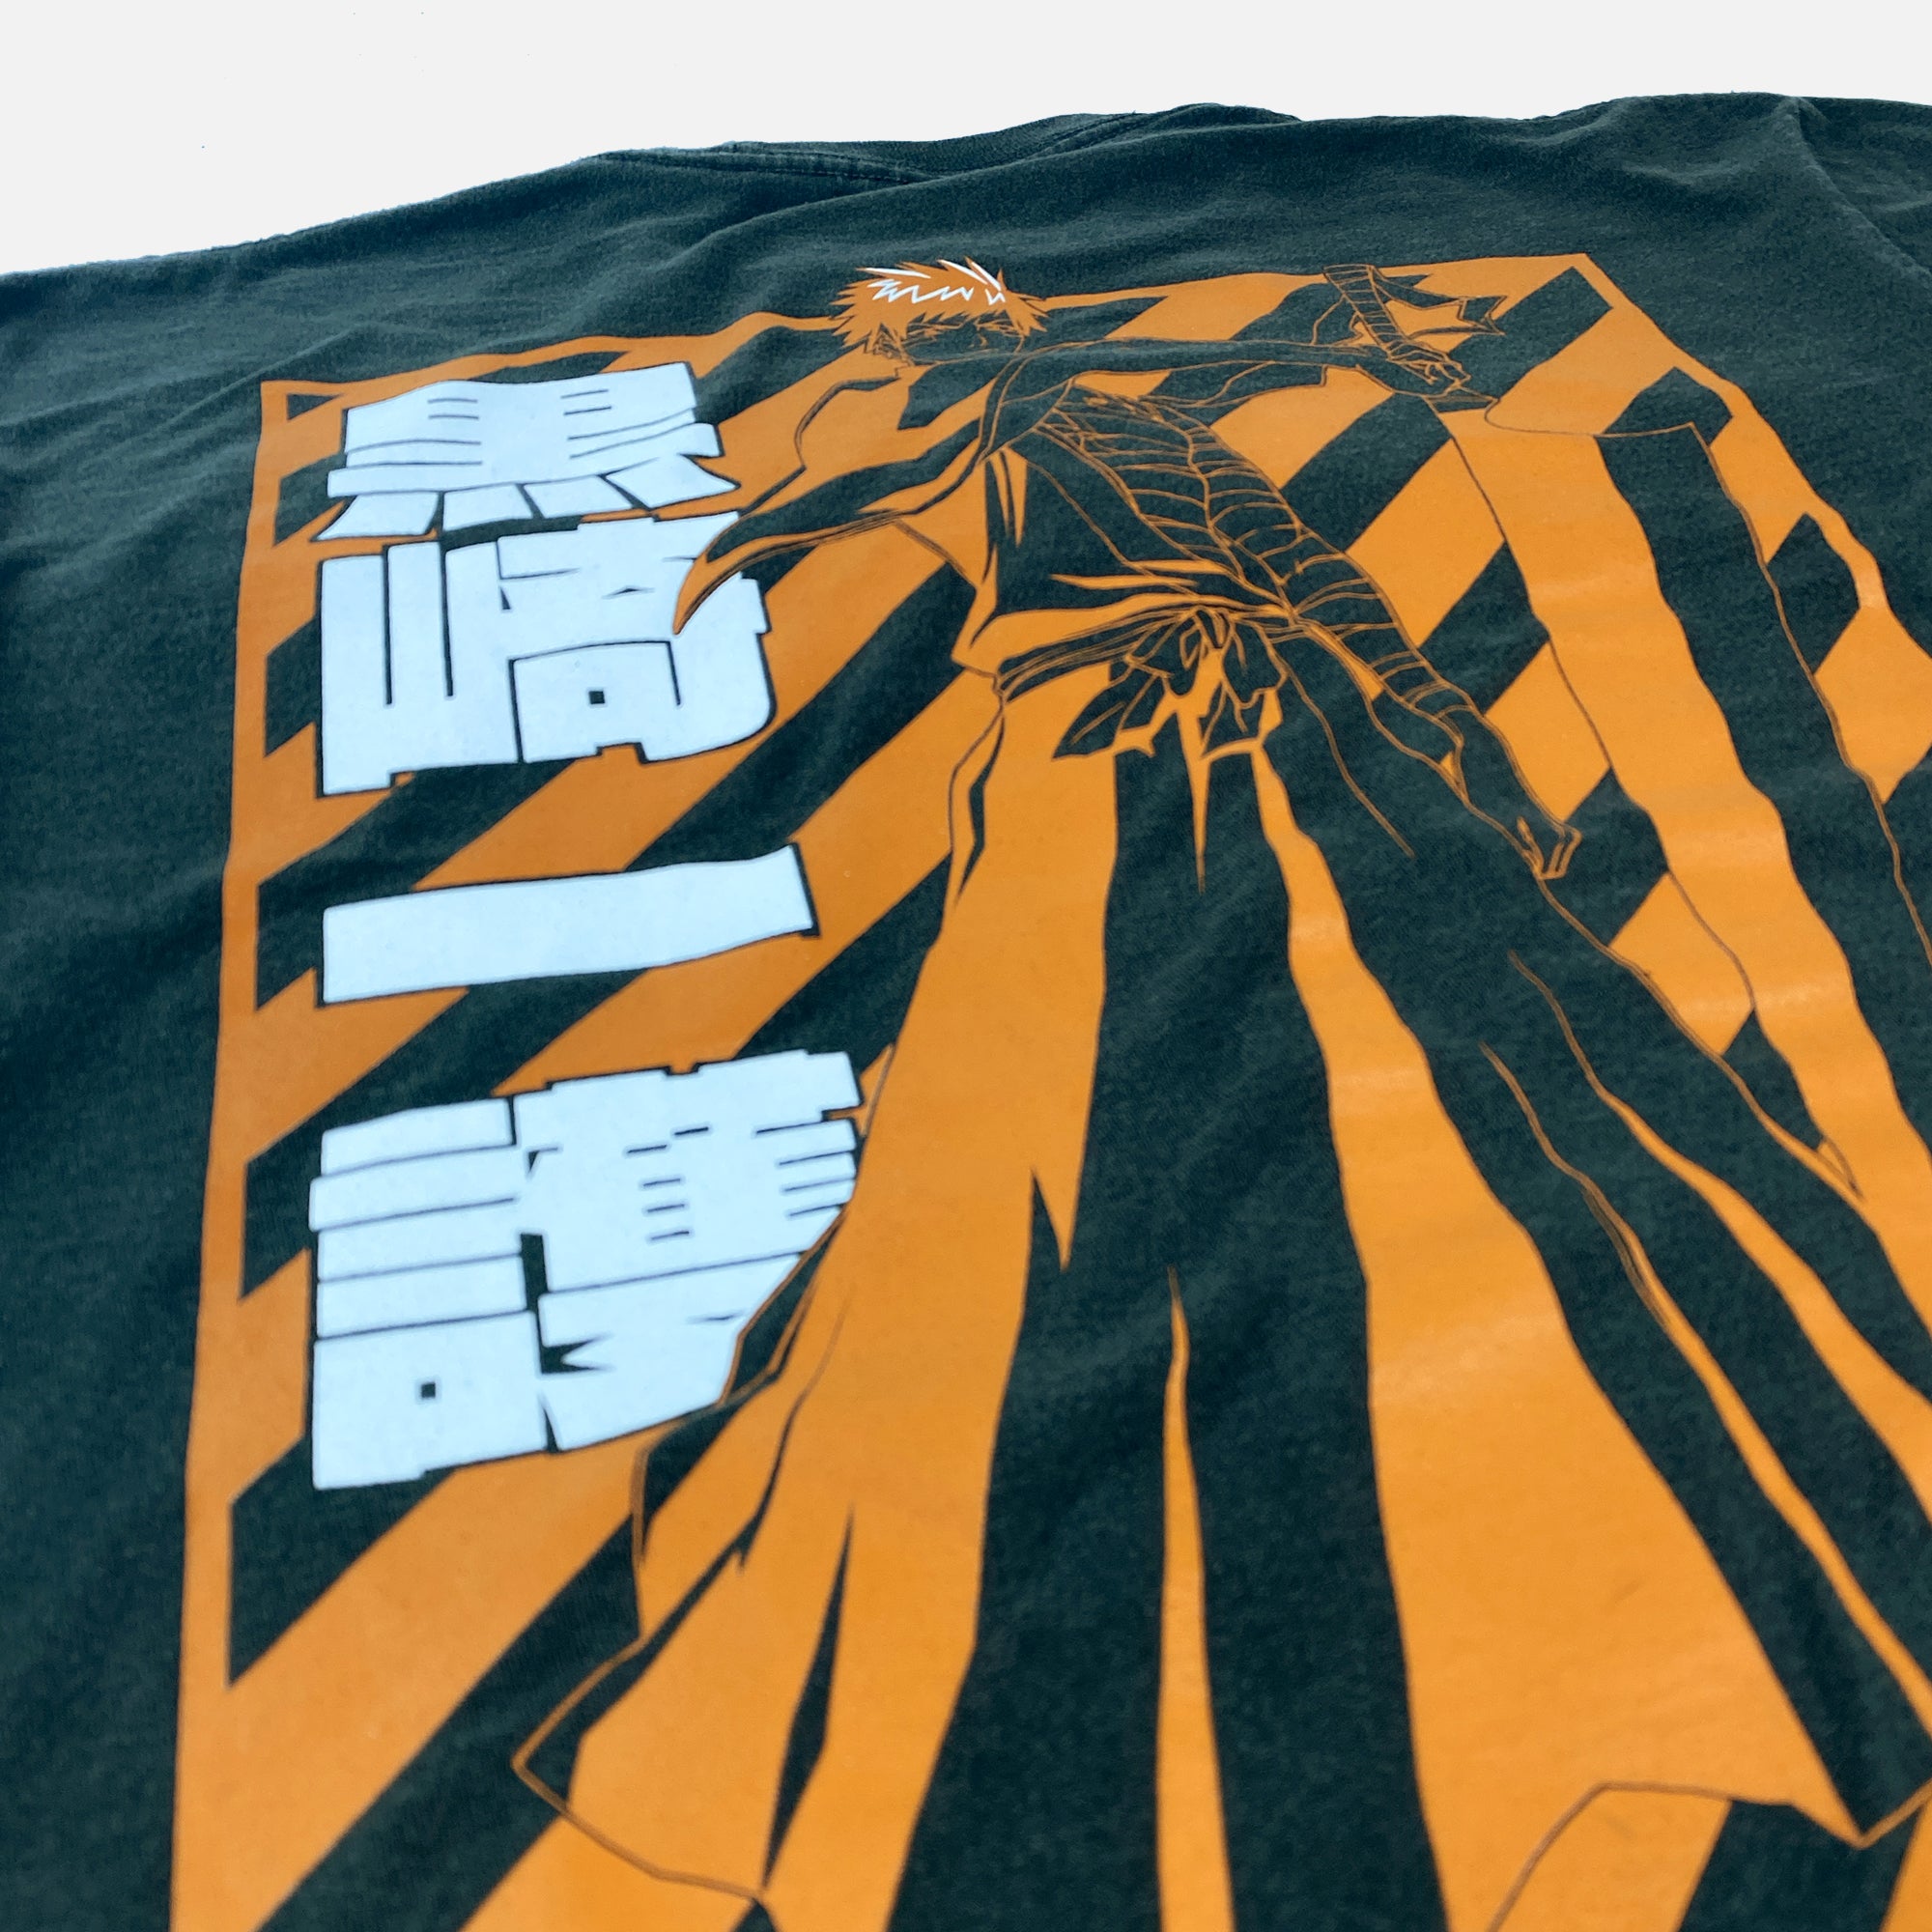 BLEACH - Ichigo Shinigami T-Shirt - Crunchyroll Exclusive!